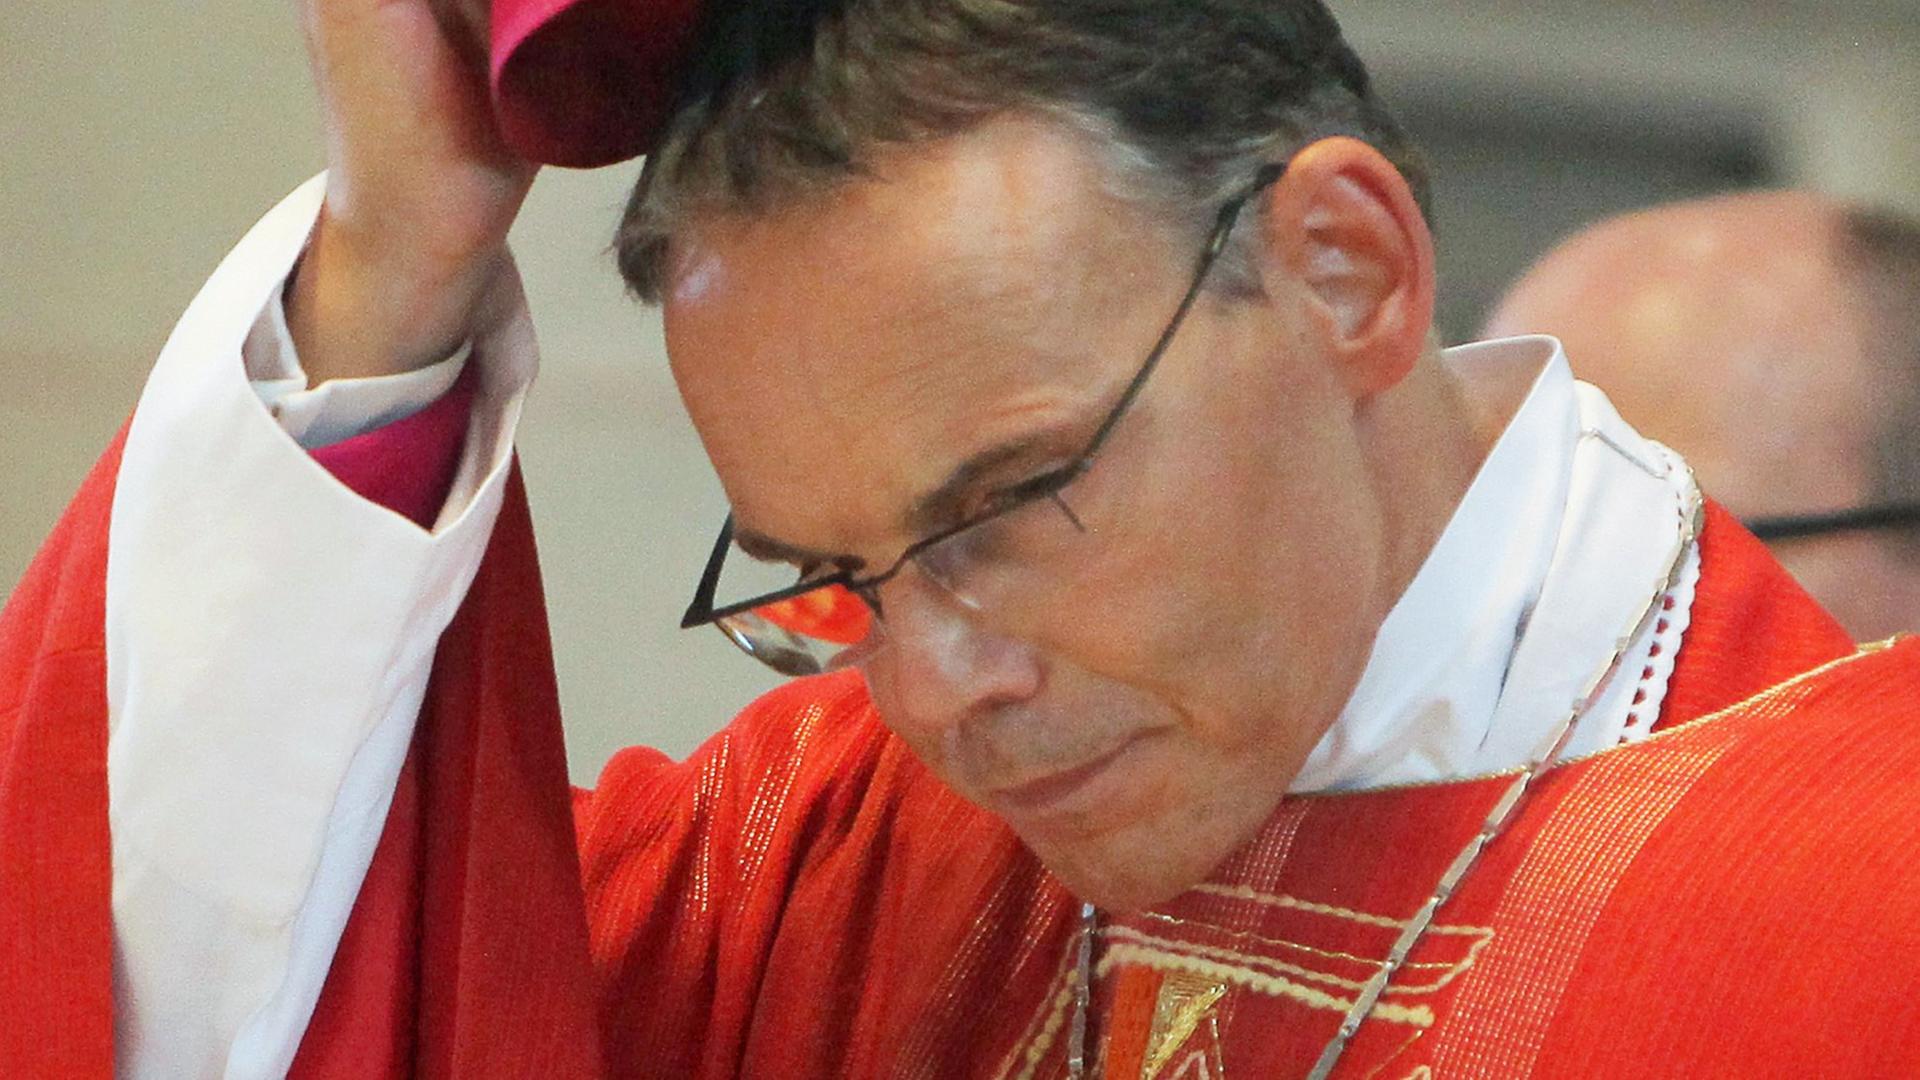 Der beurlaubte Limburger Bischof Franz-Peter Tebartz-van-Elst